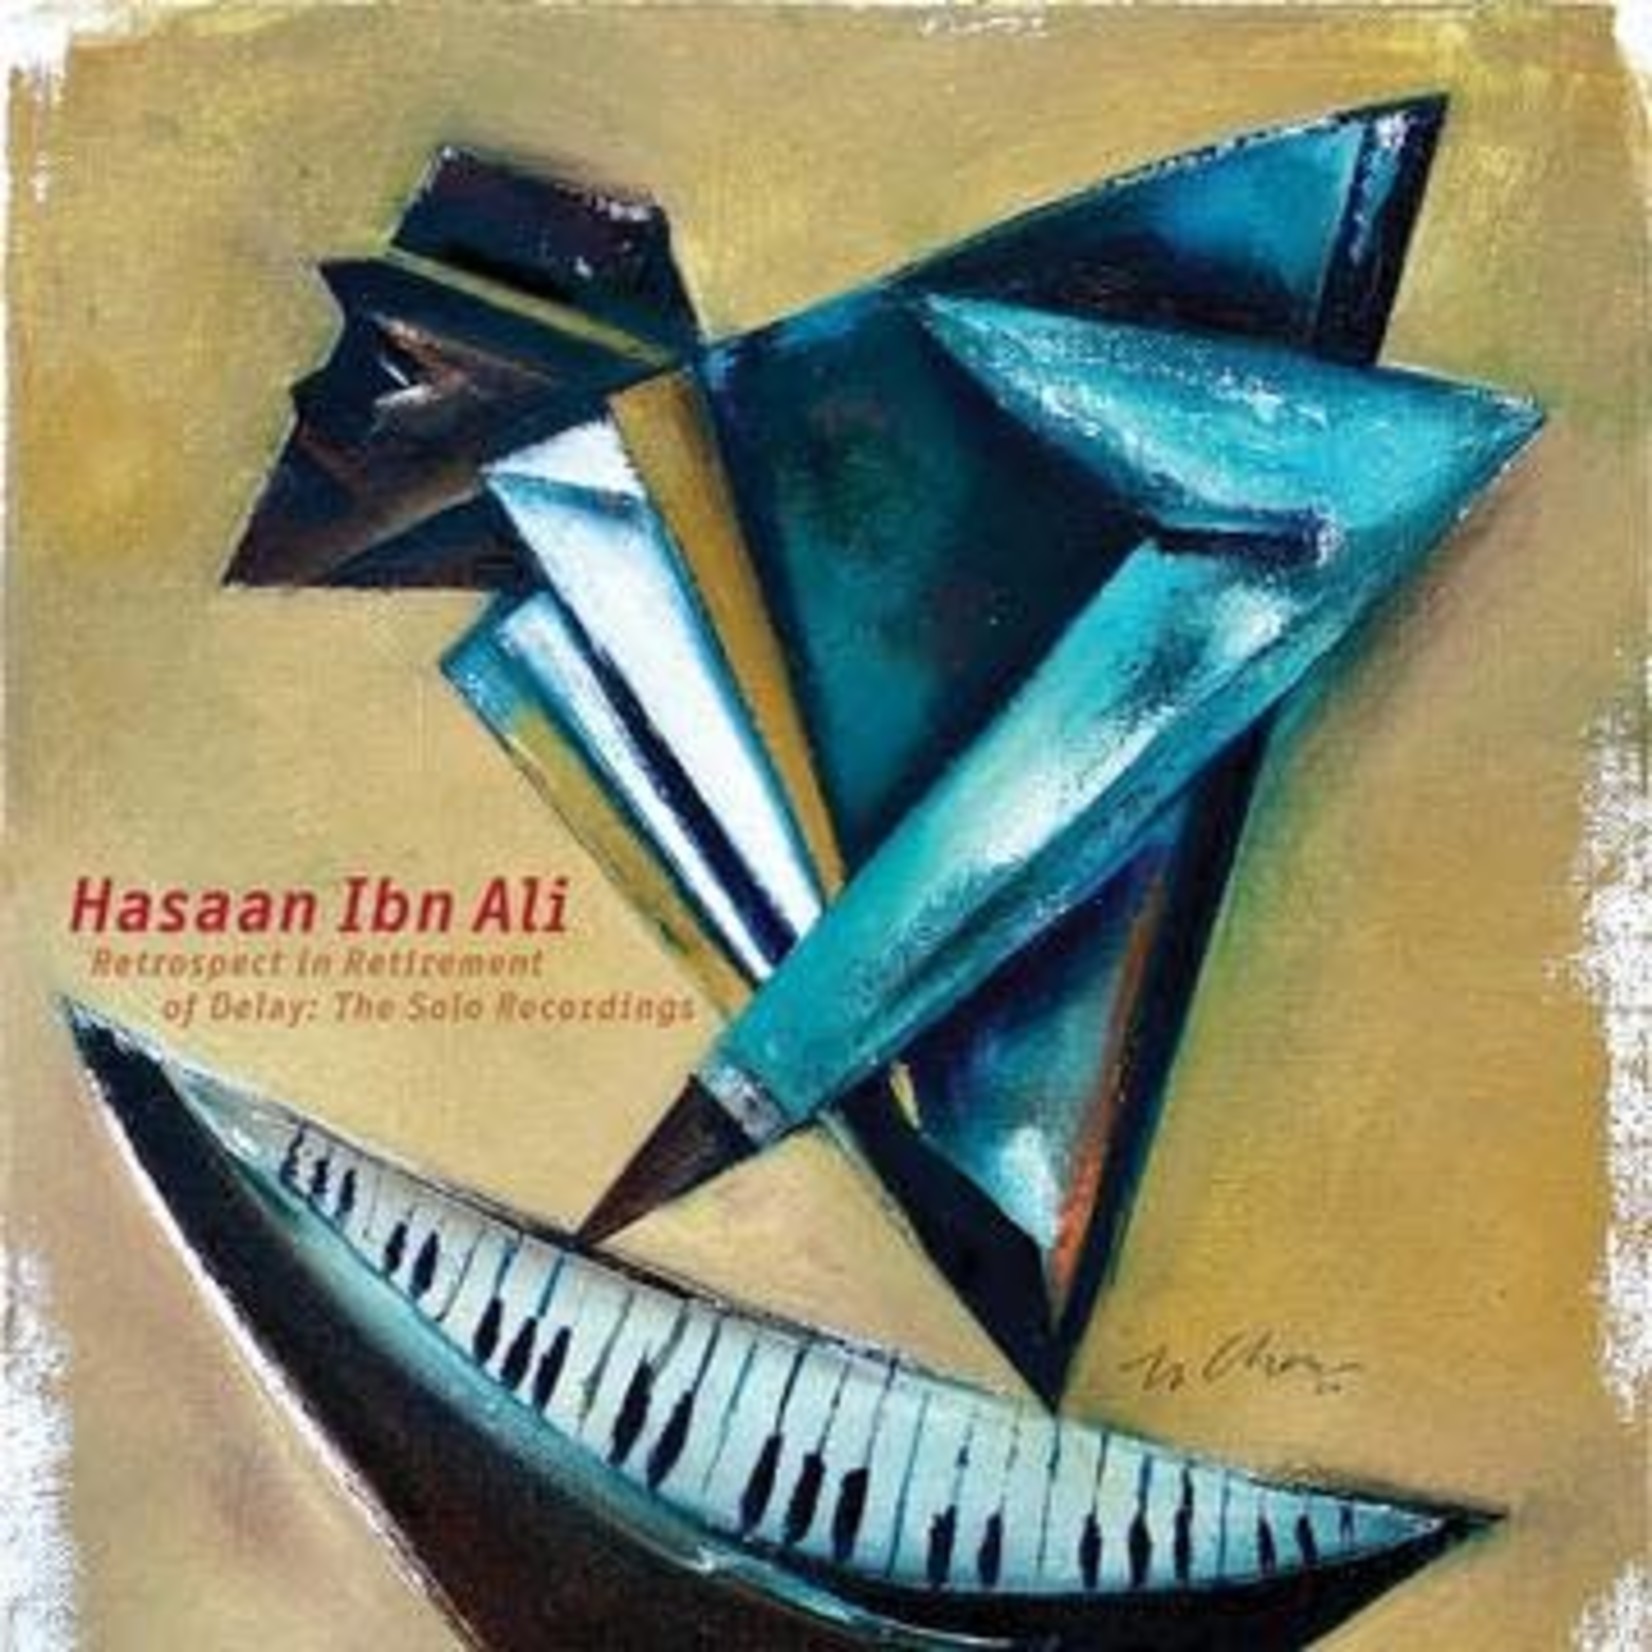 Hasaan Ibn Ali - Retrospect In Retirement Of Delay: The Solo Recordings [4LP] (RSD2022)